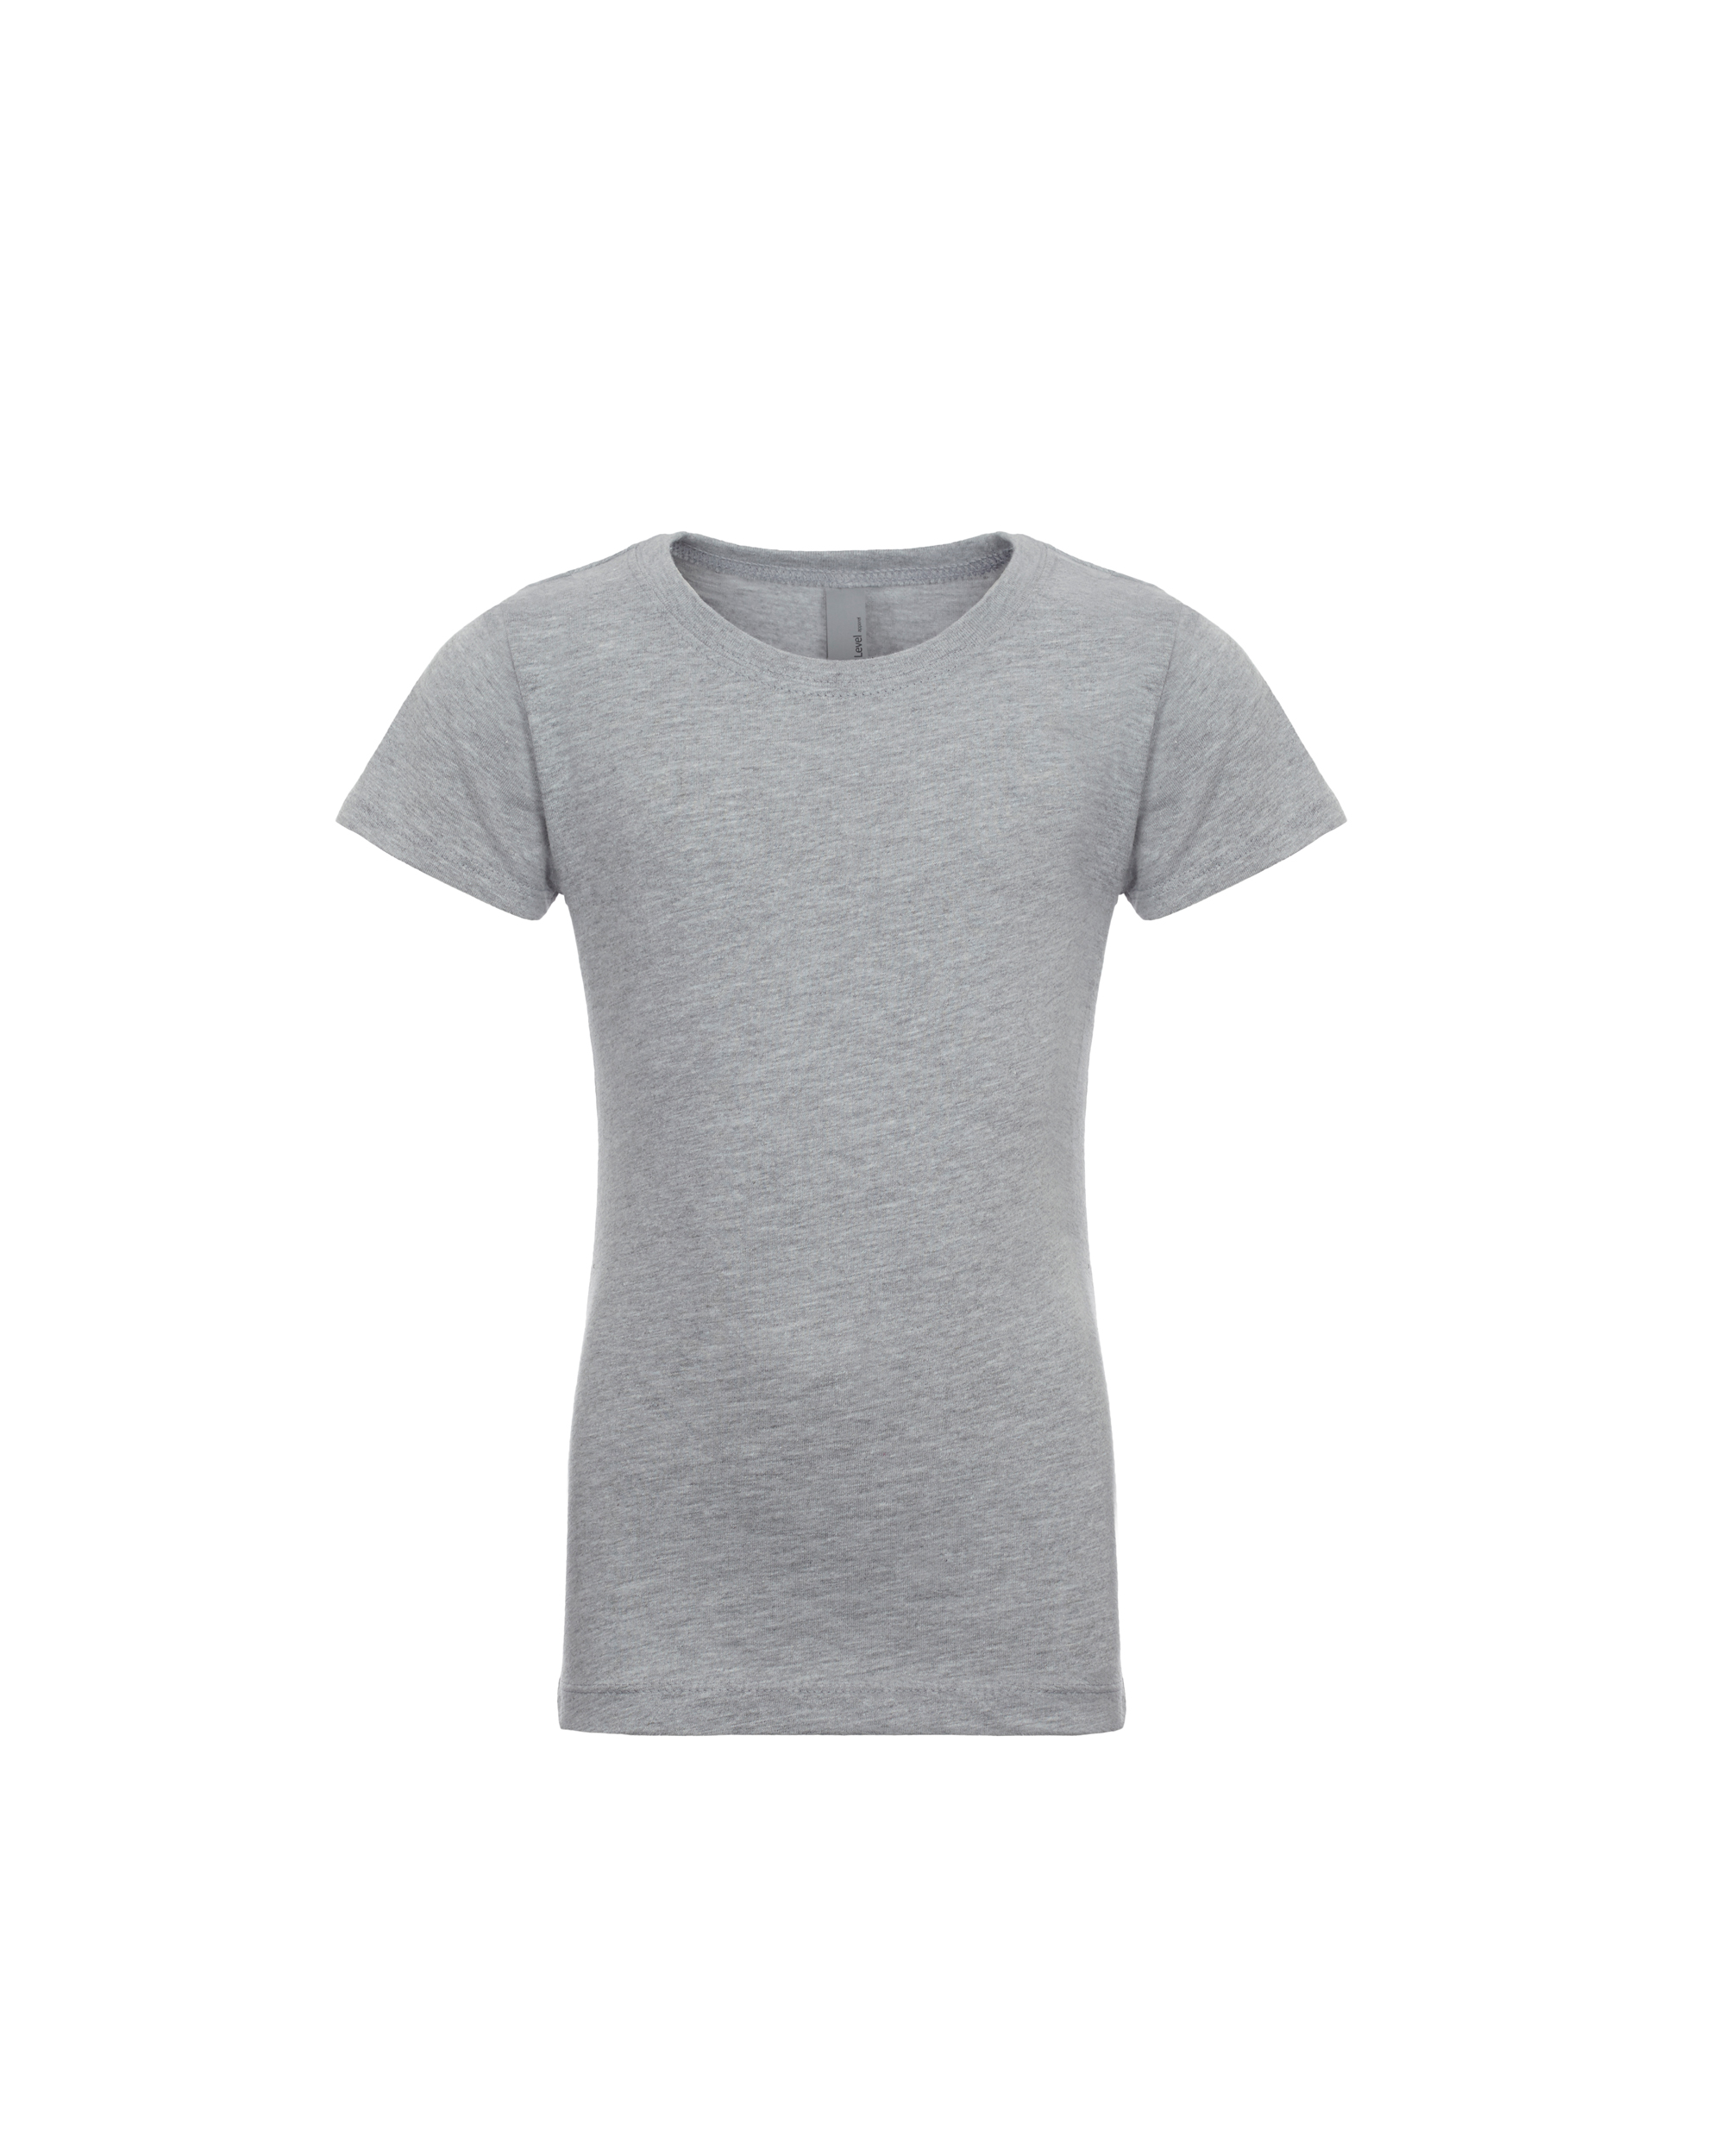 Next Level Apparel® 3710 Girl's Cotton Princess T-Shirt